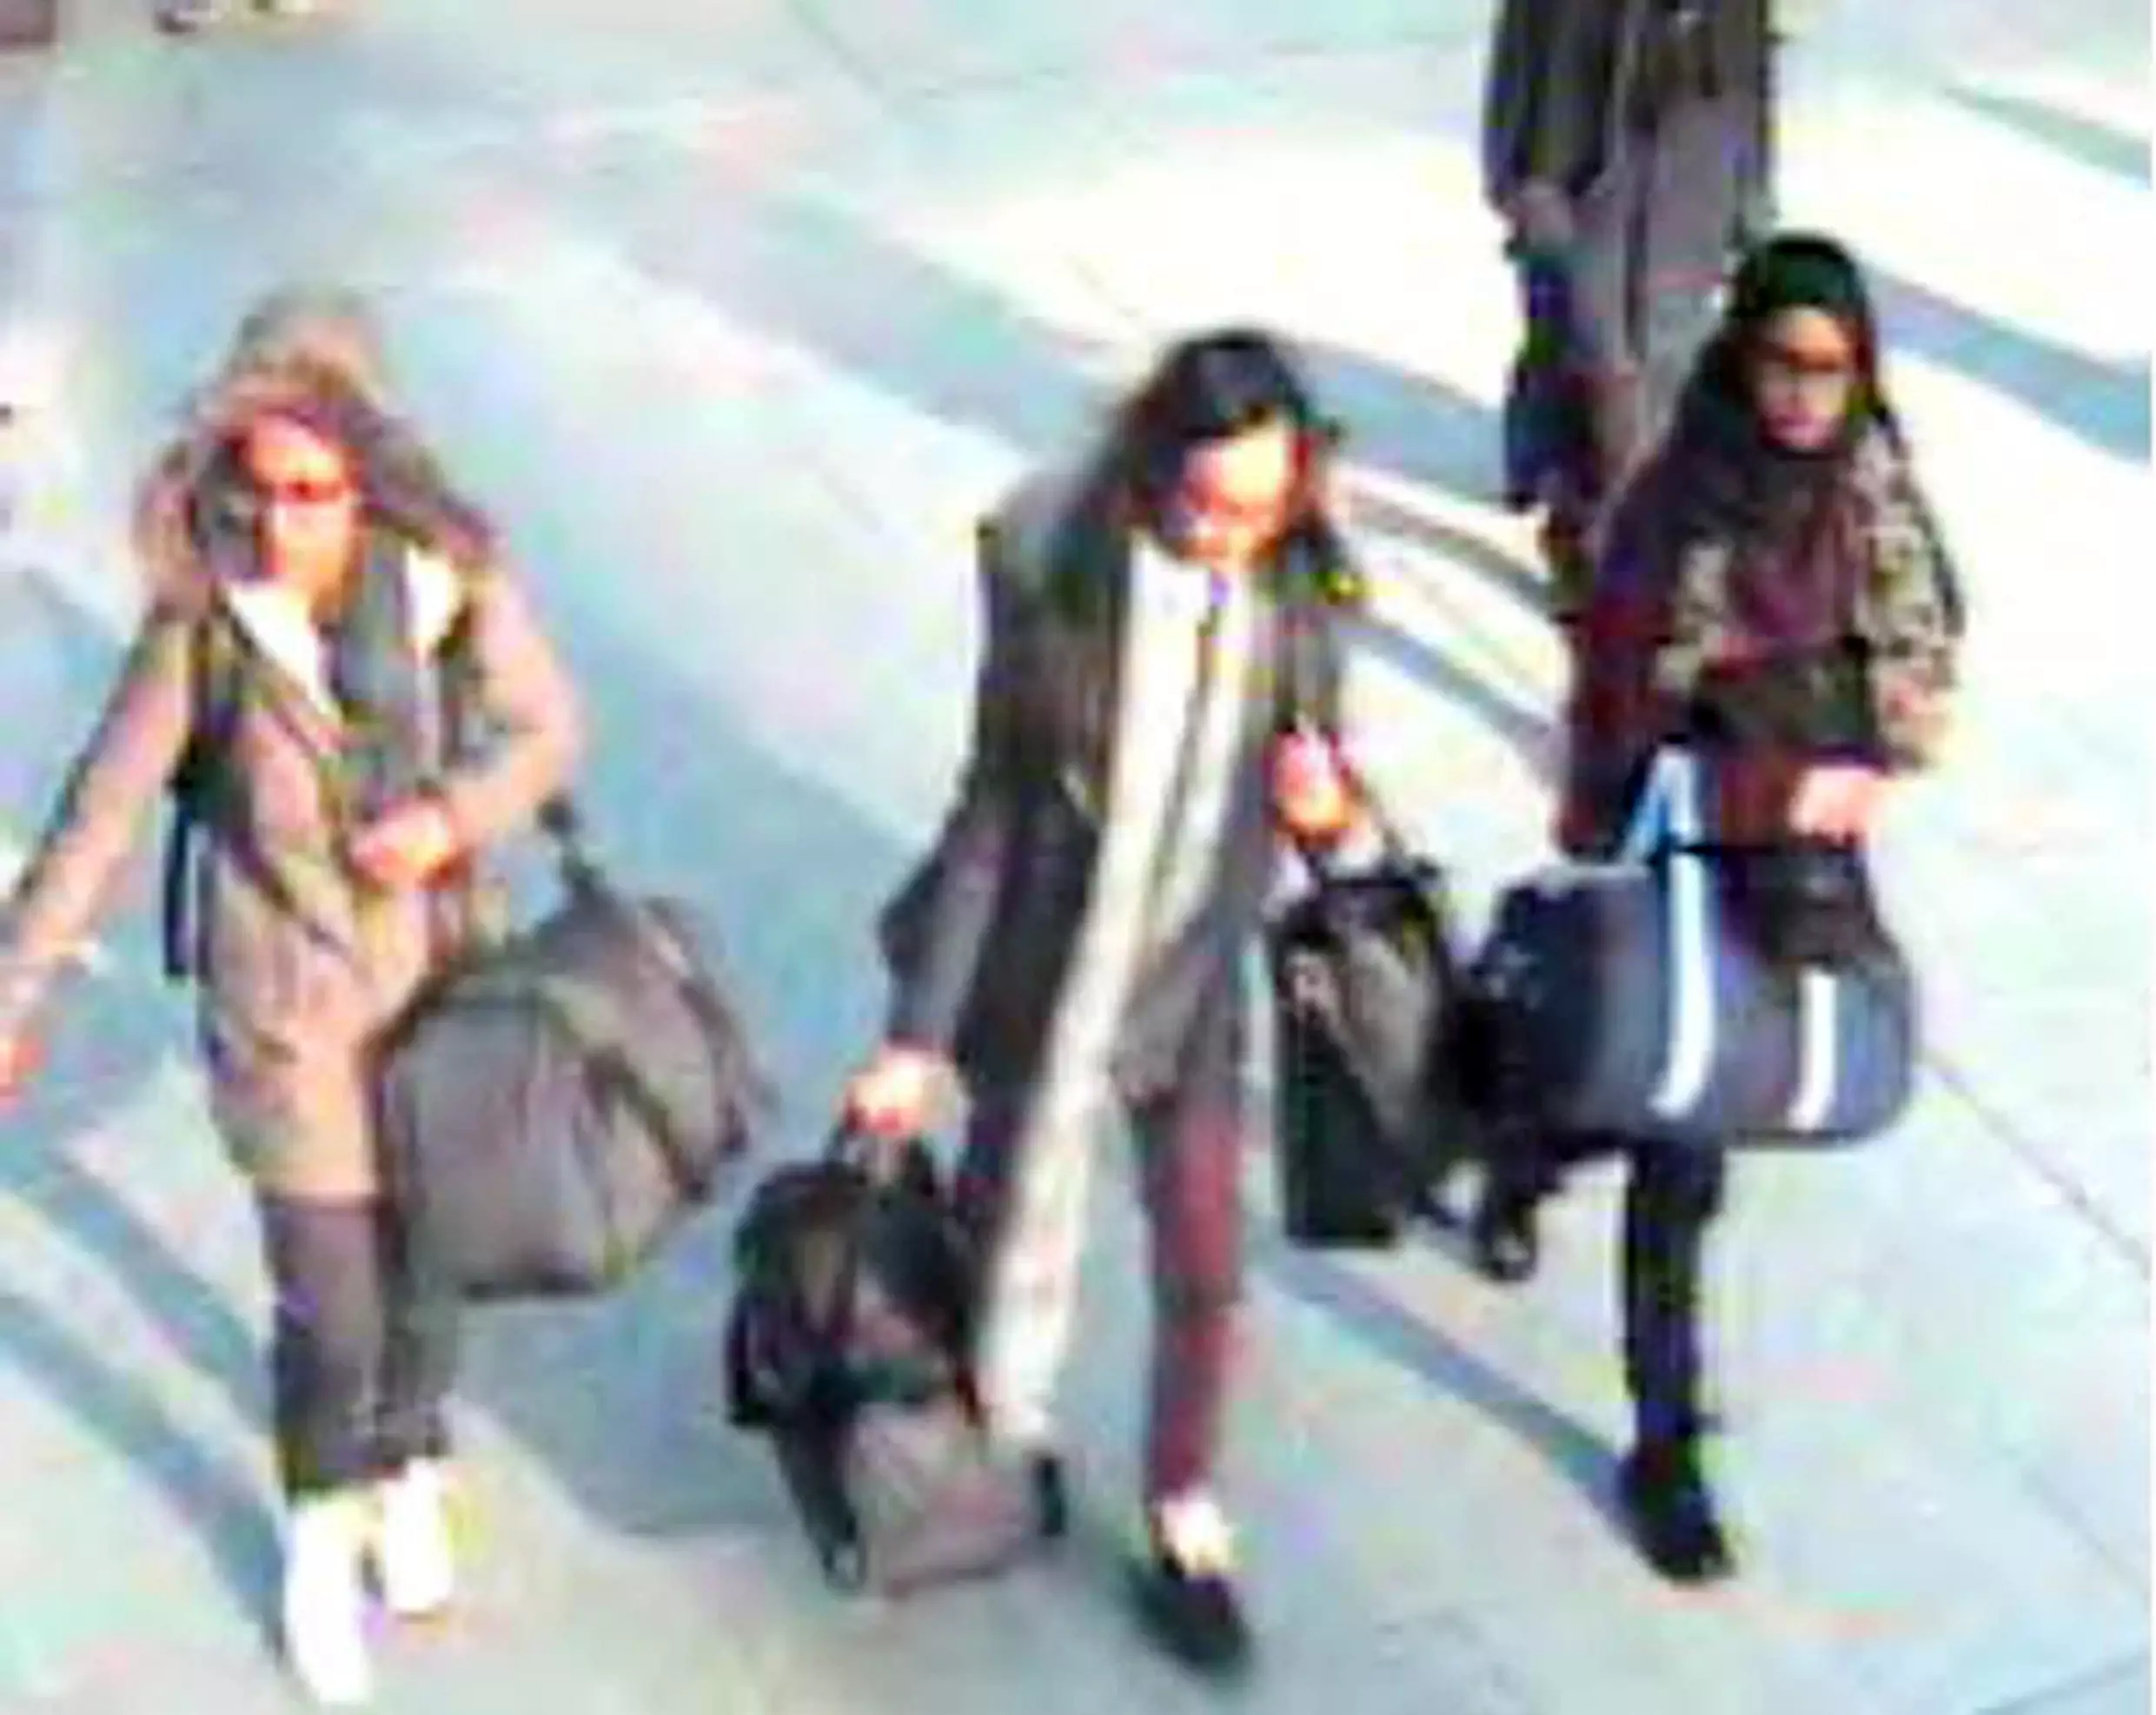 15-year-old Amira Abase, Kadiza Sultana, 16, and Shamima Begum, 15, at Gatwick airport in February 2015.